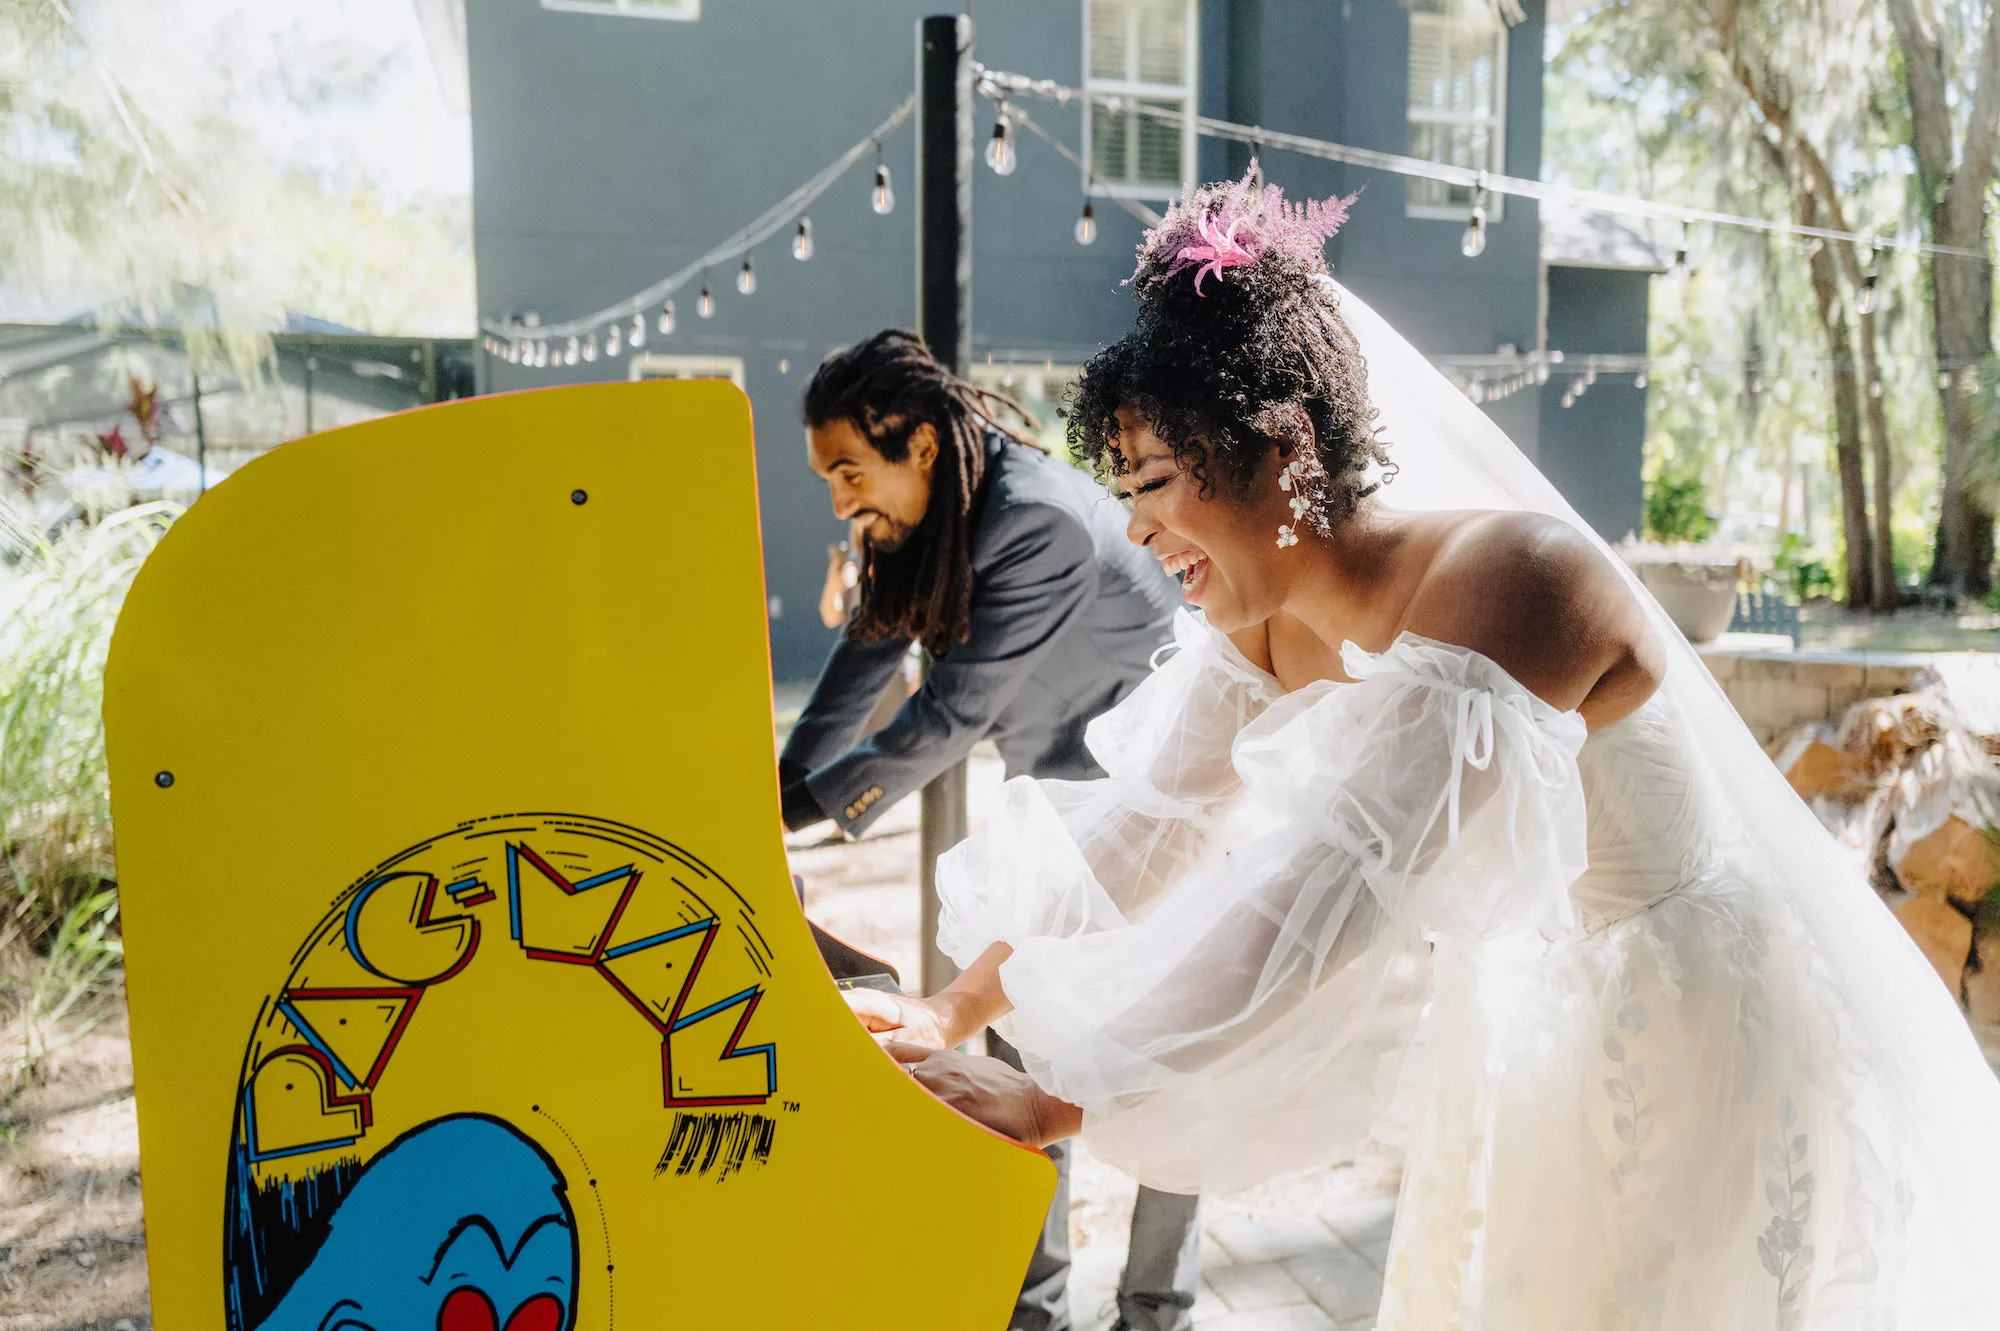 Wedding Reception Arcade Video Game Entertainment Inspiration | Tampa Planner Wilder Mind Events